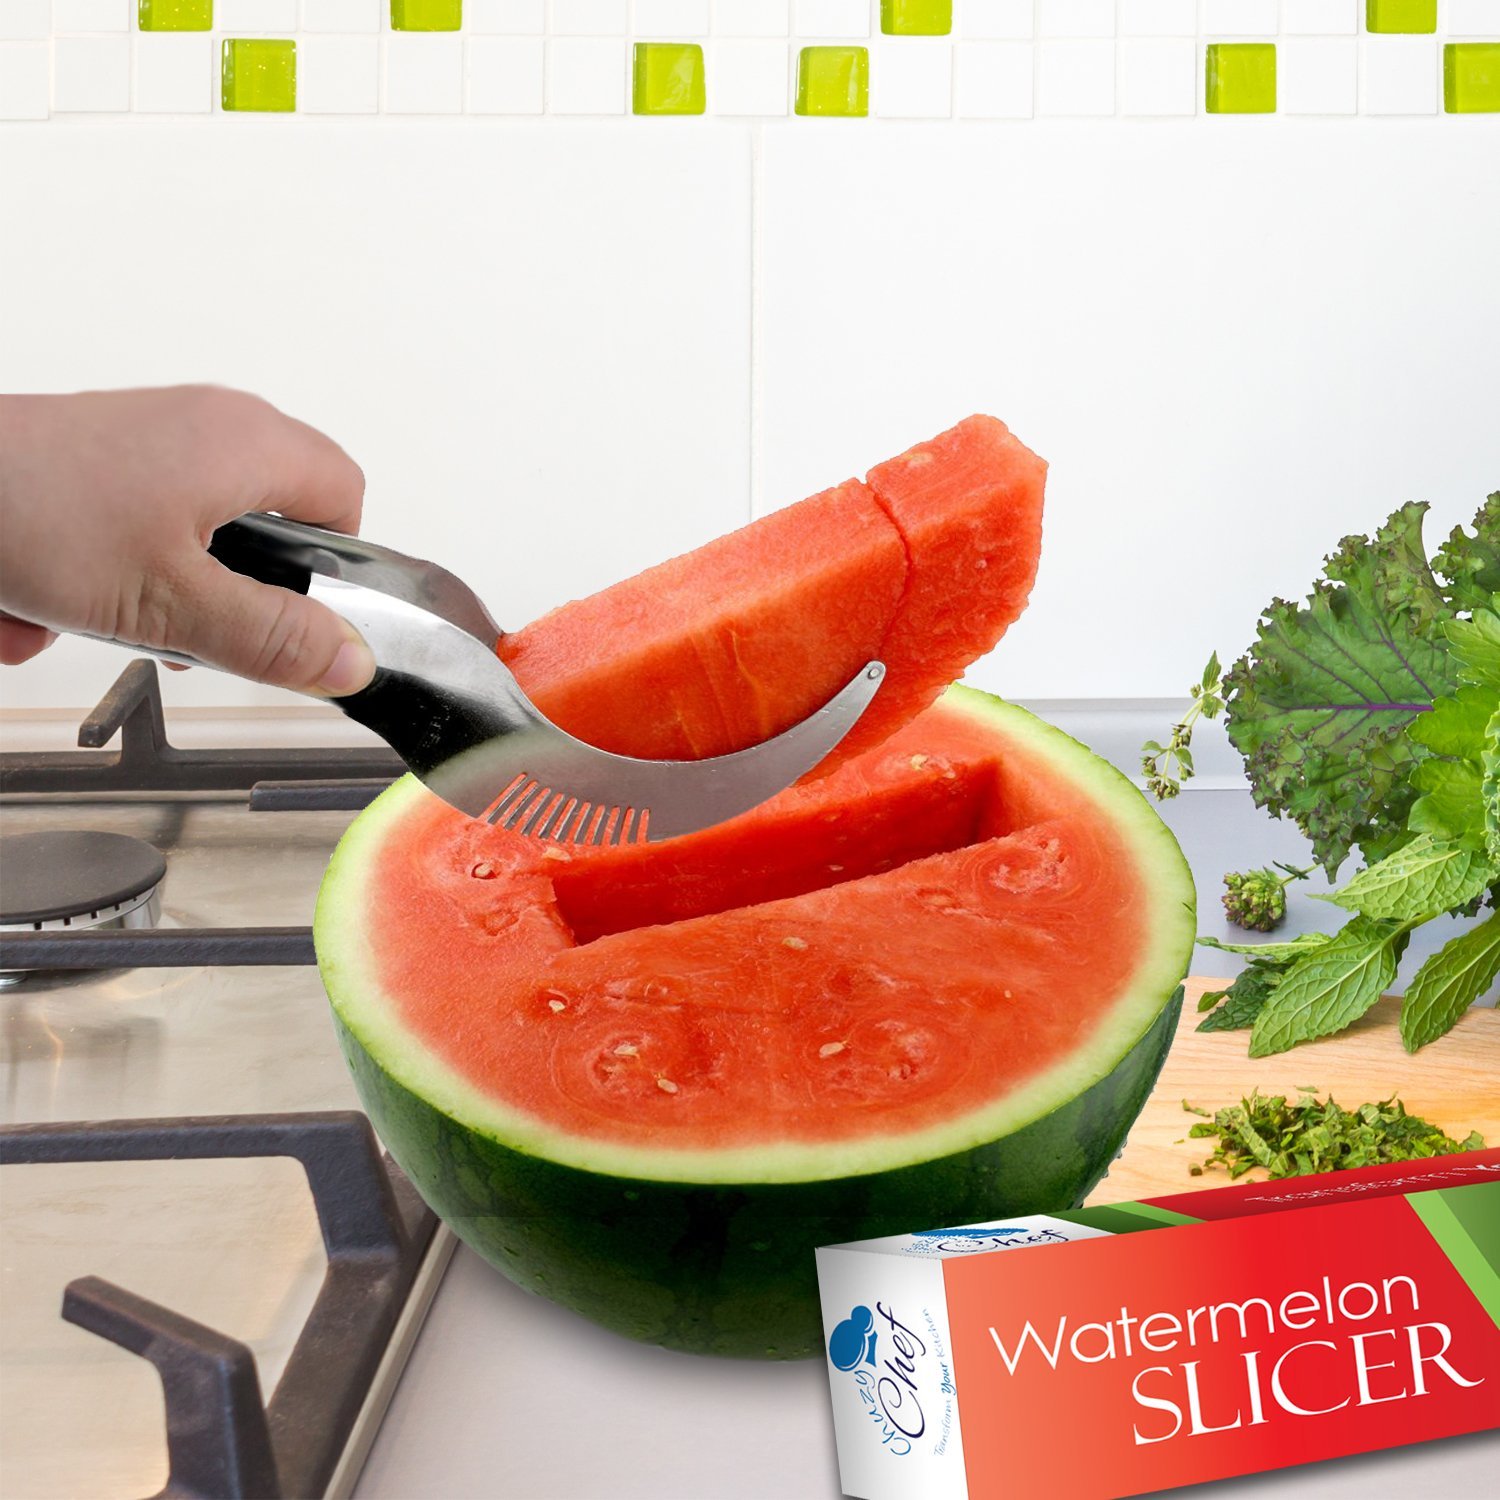 Amazon.com: Watermelon Slicer Cutter Corer & Server - Multipurpose ...